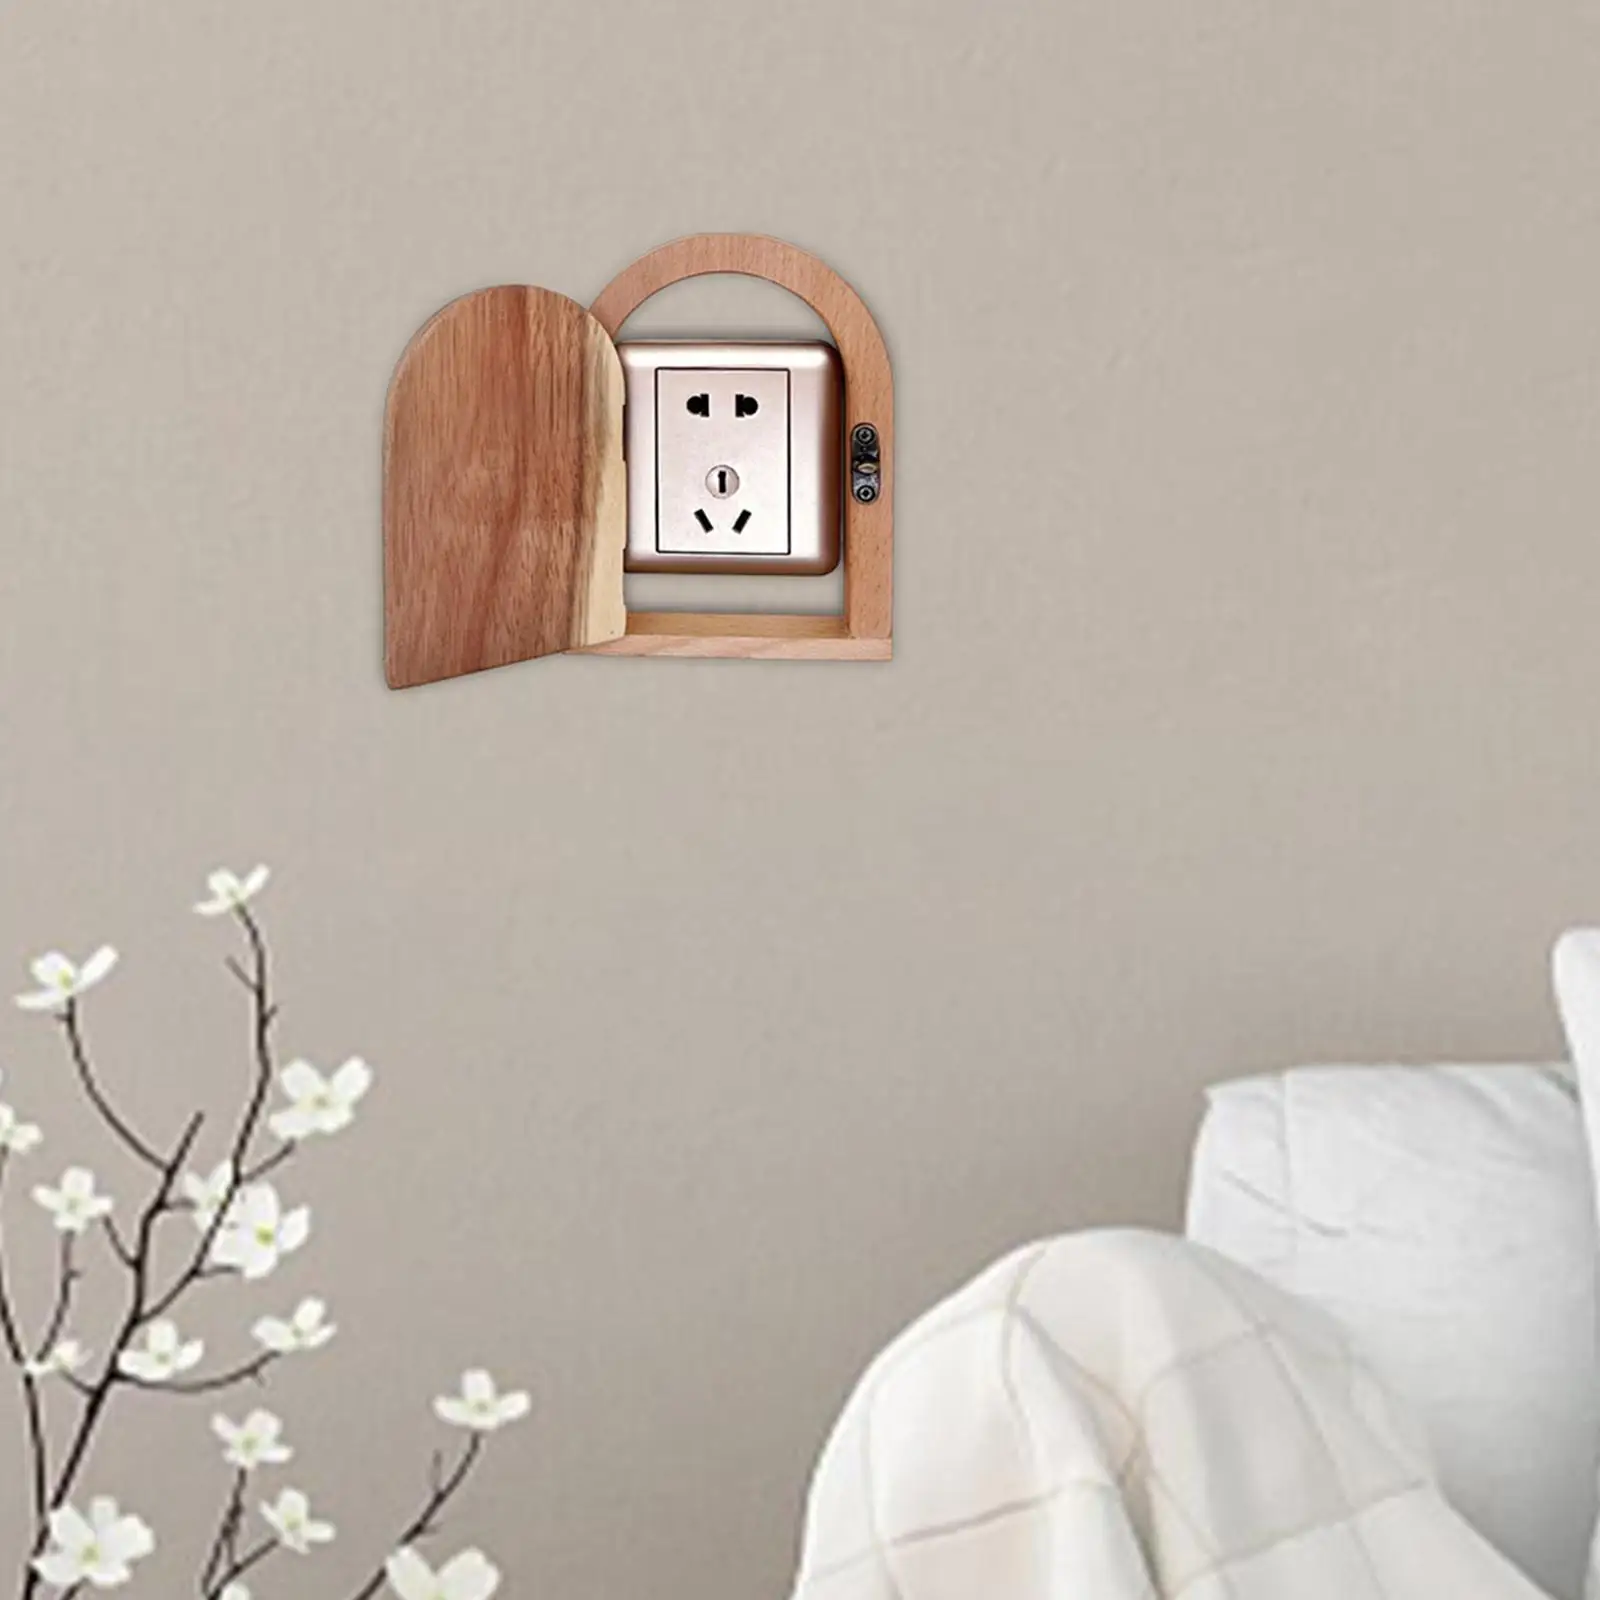 Electrical Outlet Cover Wood Lockable Socket Protection Box for Warehouse Restaurant Living Room Workshop Bathroom